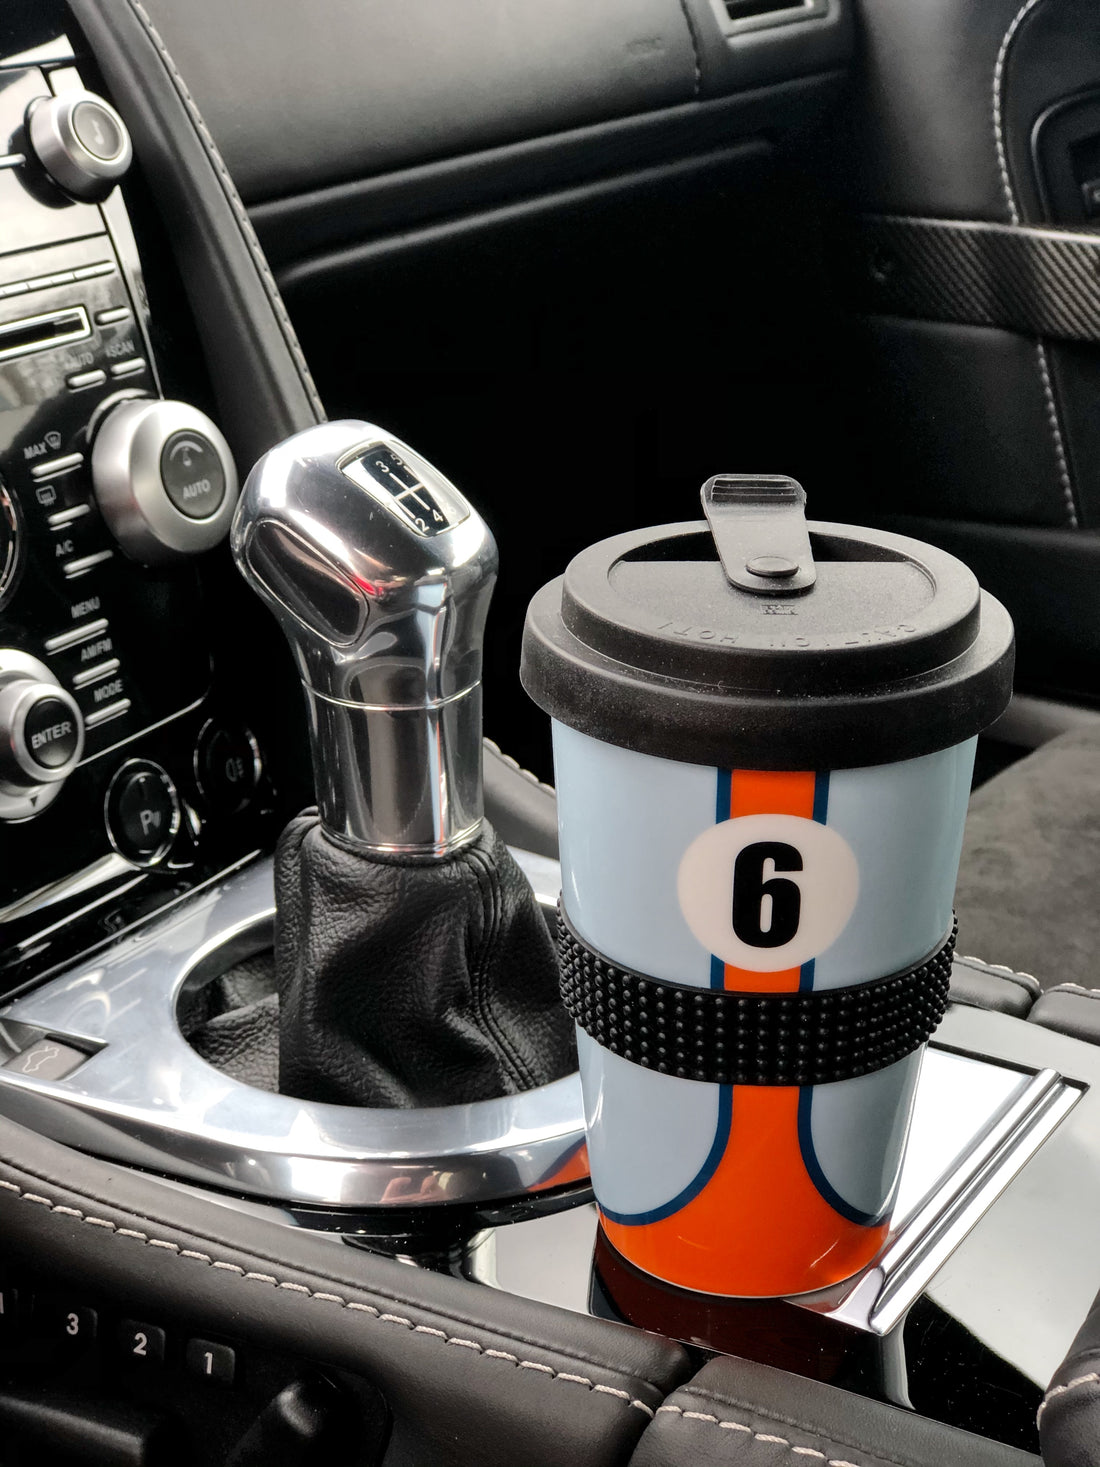 Iconic Gulf Livery for Automotive Mugs